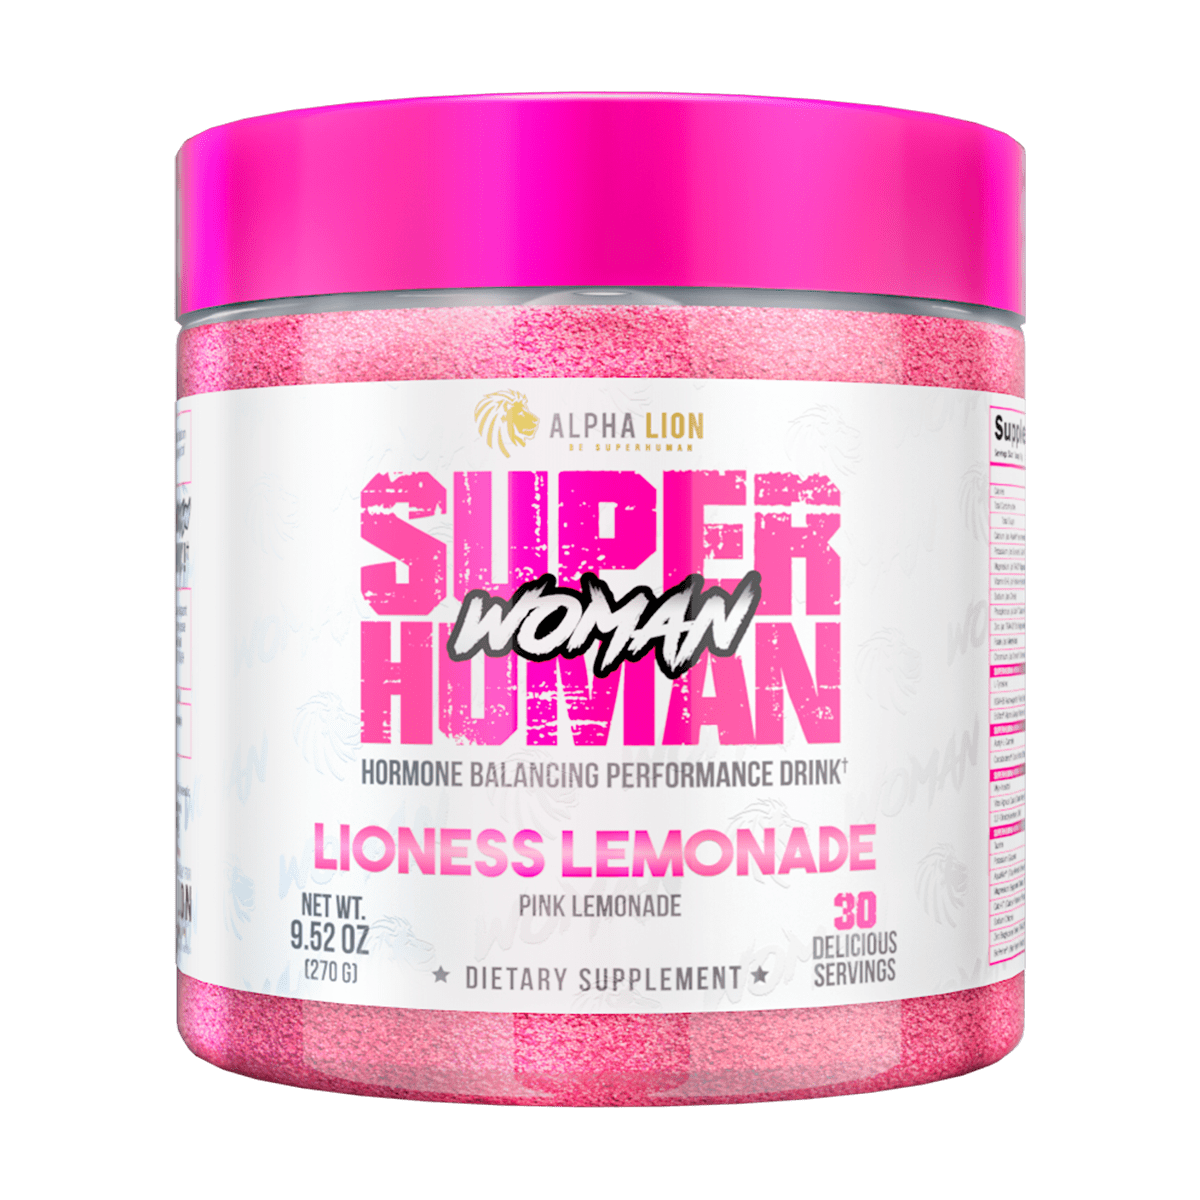 SUPERHUMAN® WOMAN - Hormone Balancing Performance Drink 2